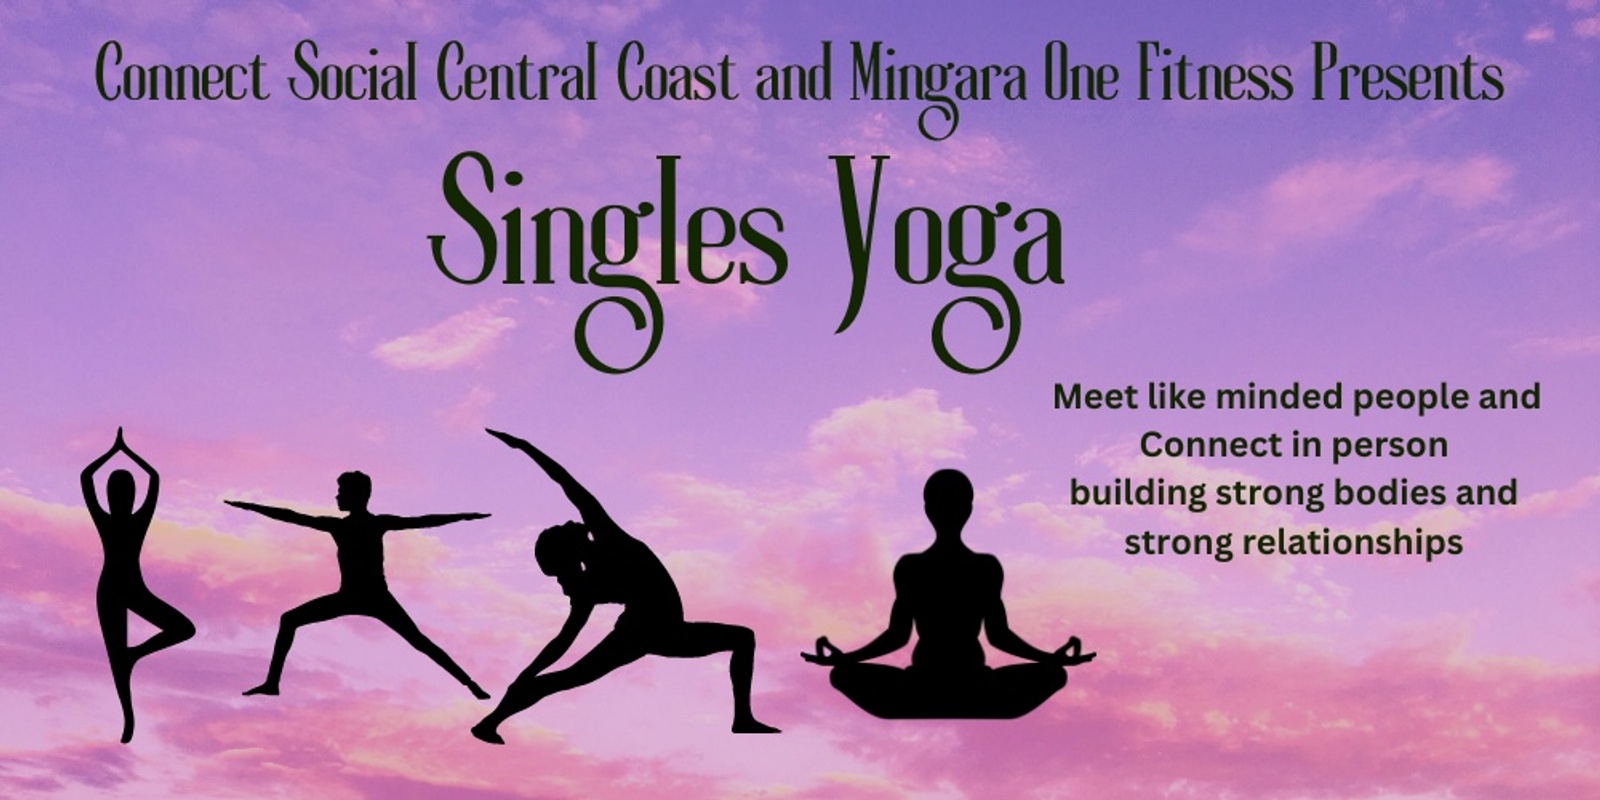 Singles Yoga at Mingara 